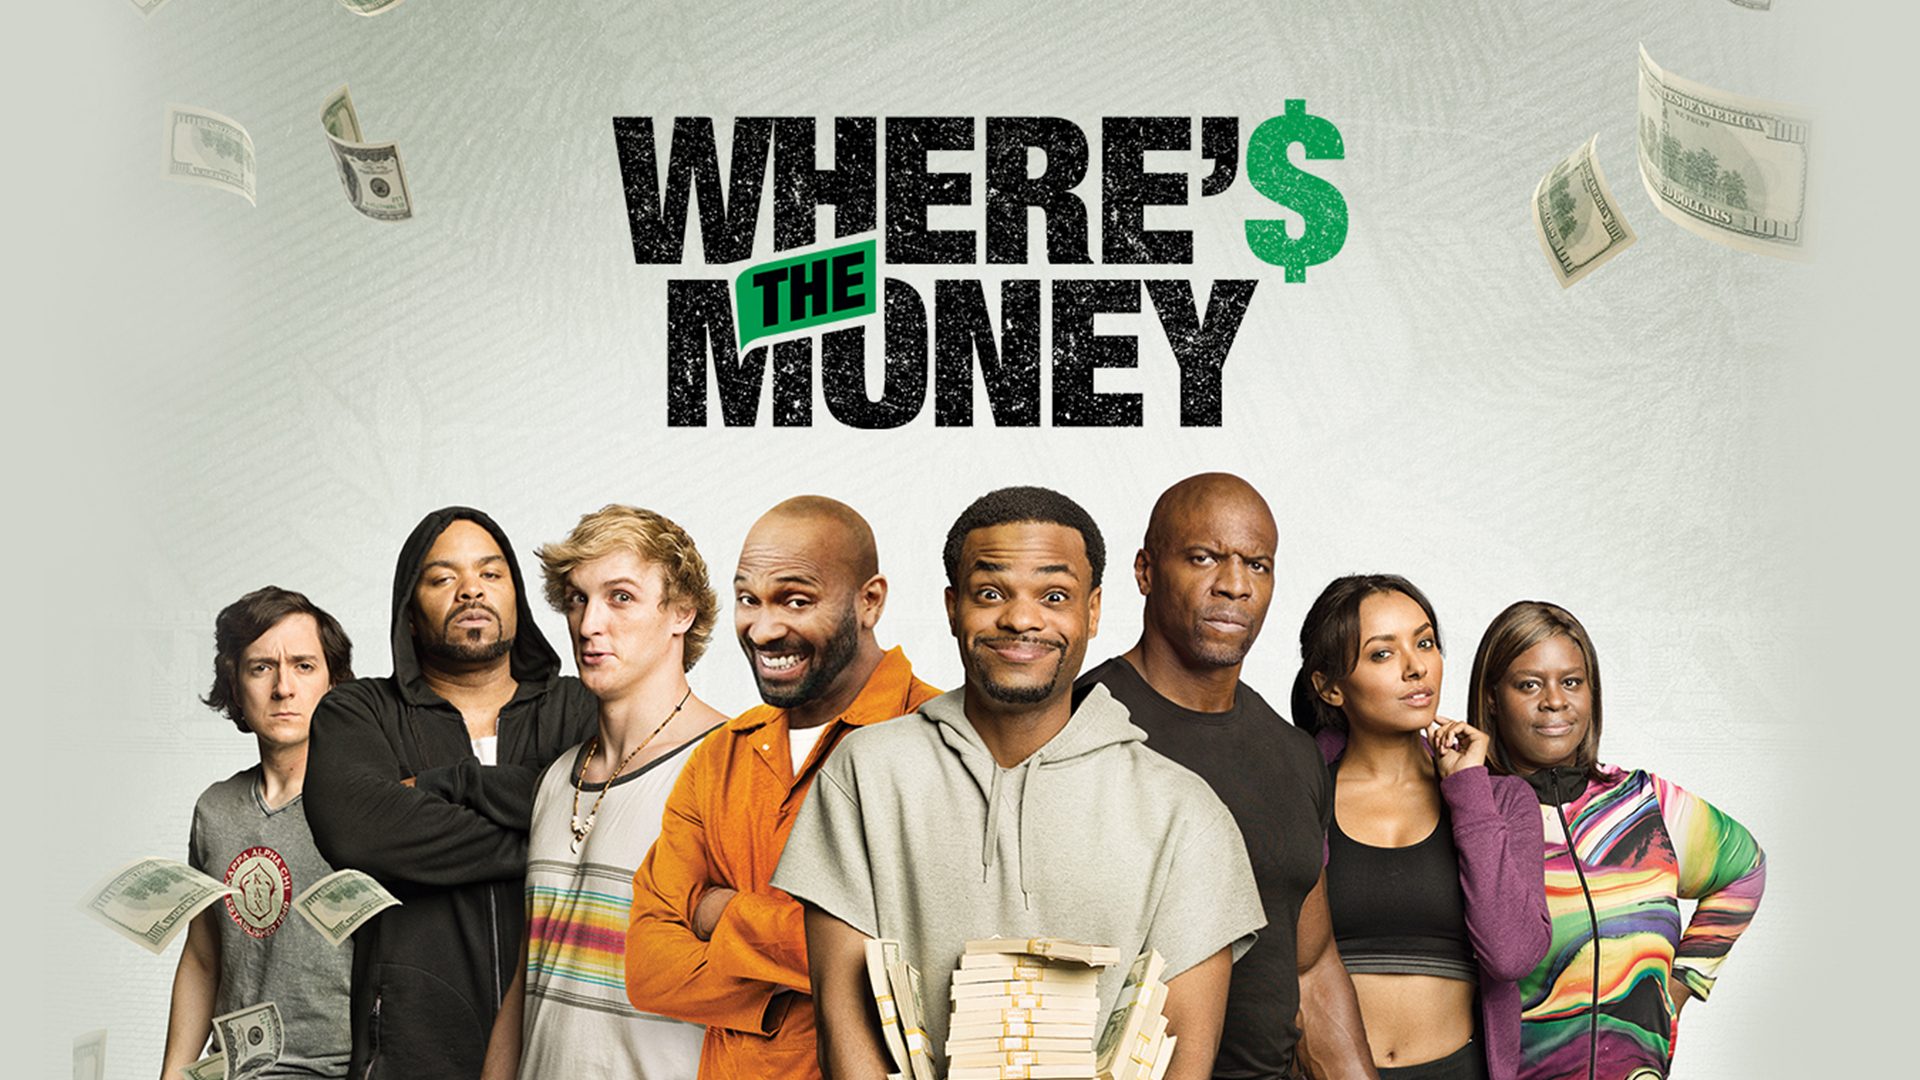 WHEREu0027S THE MONEY Official Trailer #1 (2017) Terry Crews, Logan Paul Comedy Movie HD